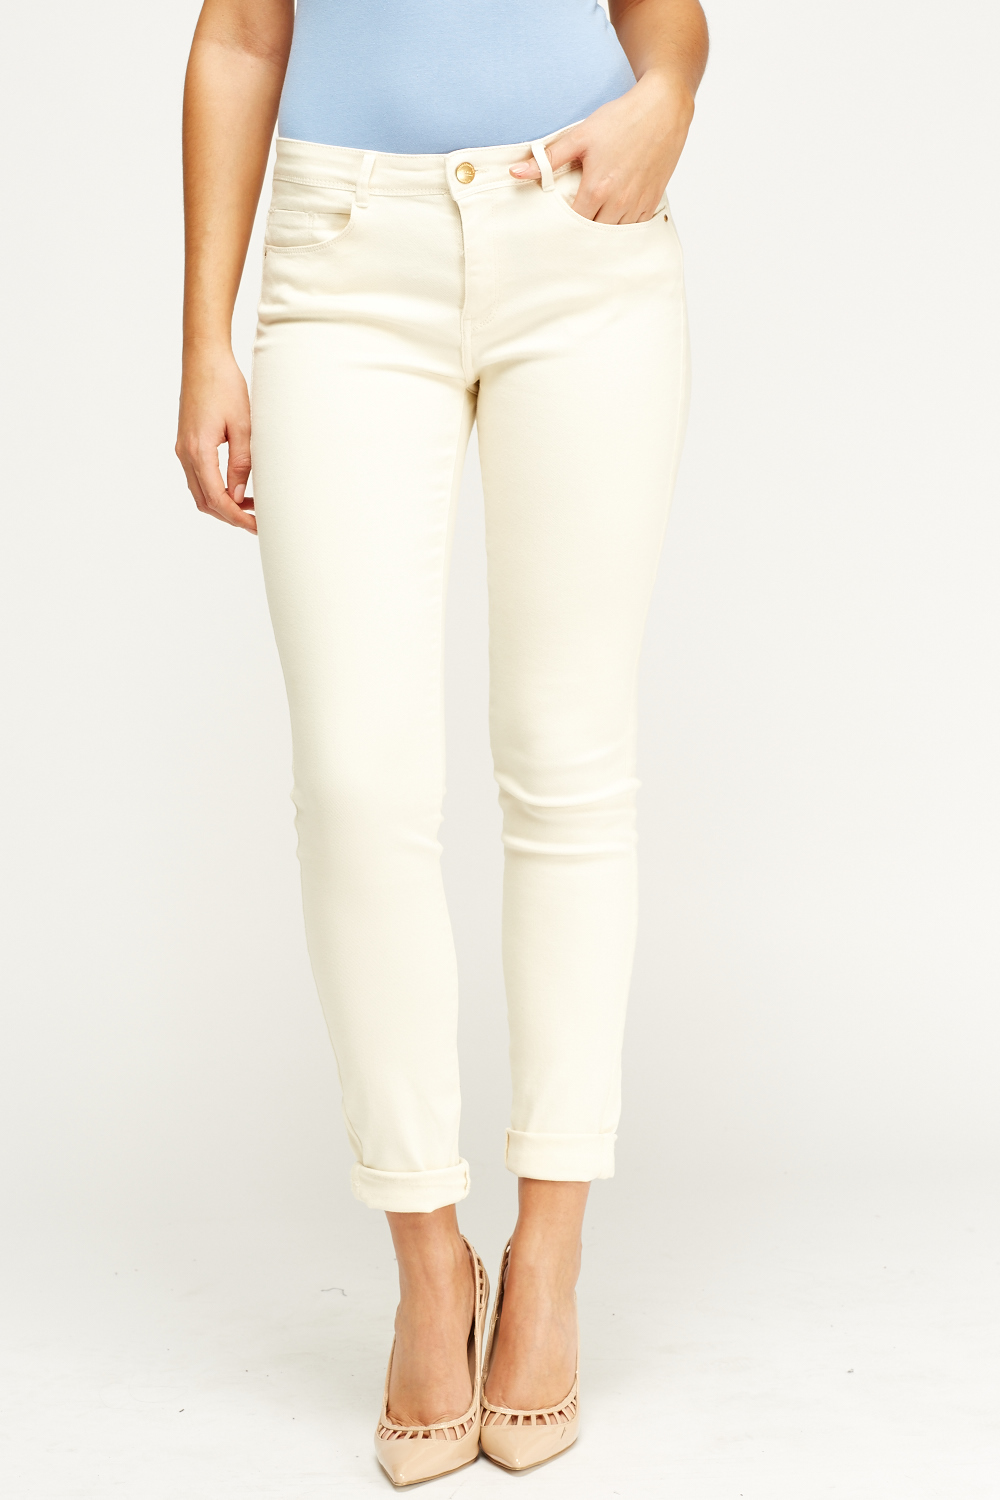 Cotton Blend Straight Leg Jeans - Just $7